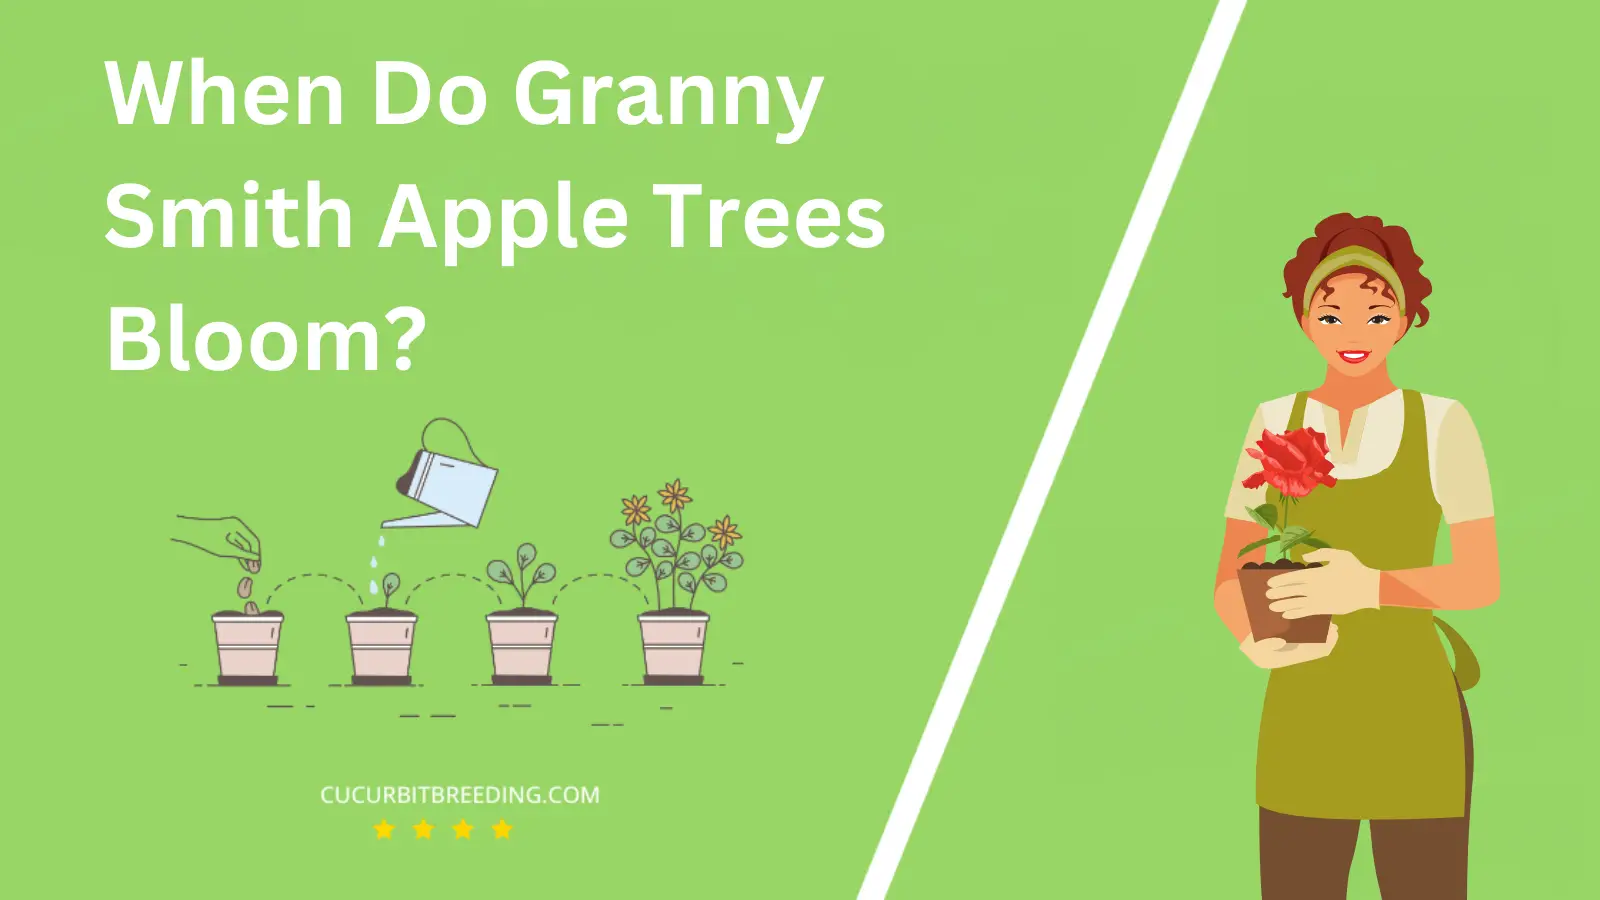 When Do Granny Smith Apple Trees Bloom?